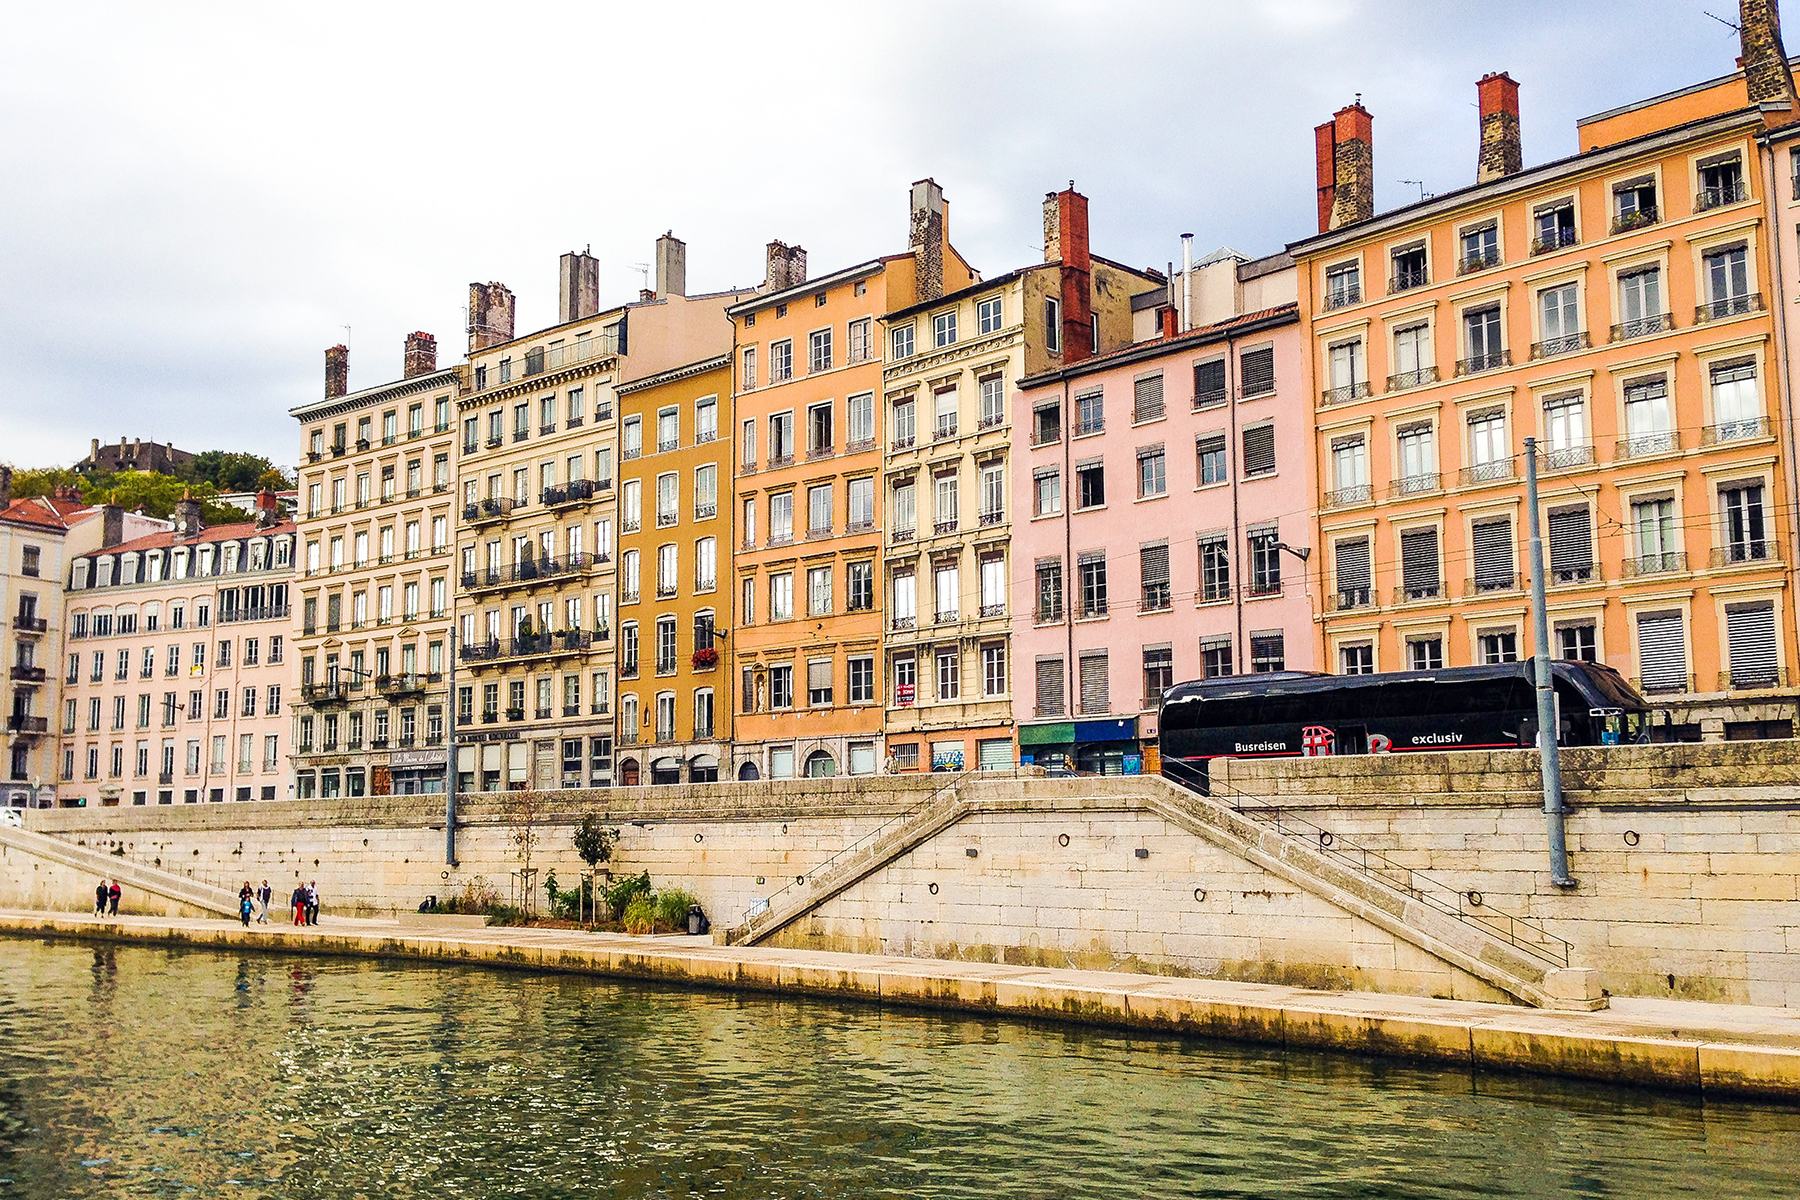 Lyon kurz, knapp & kompakt: 20 Insidertipps für Lyon